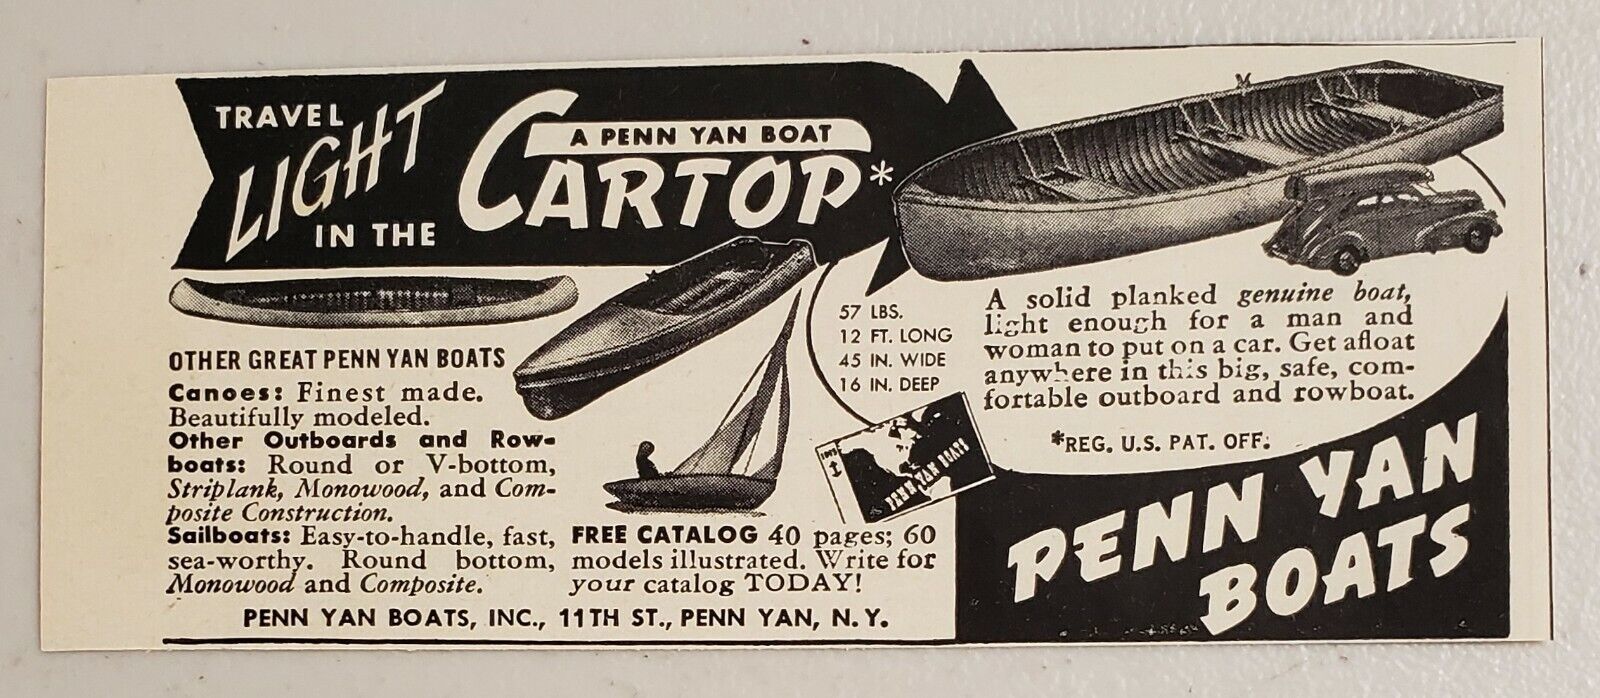 Primary image for 1949 Print Ad Penn Yan Light Cartop Boats, Canoes, Sailboats Penn Yan,New York